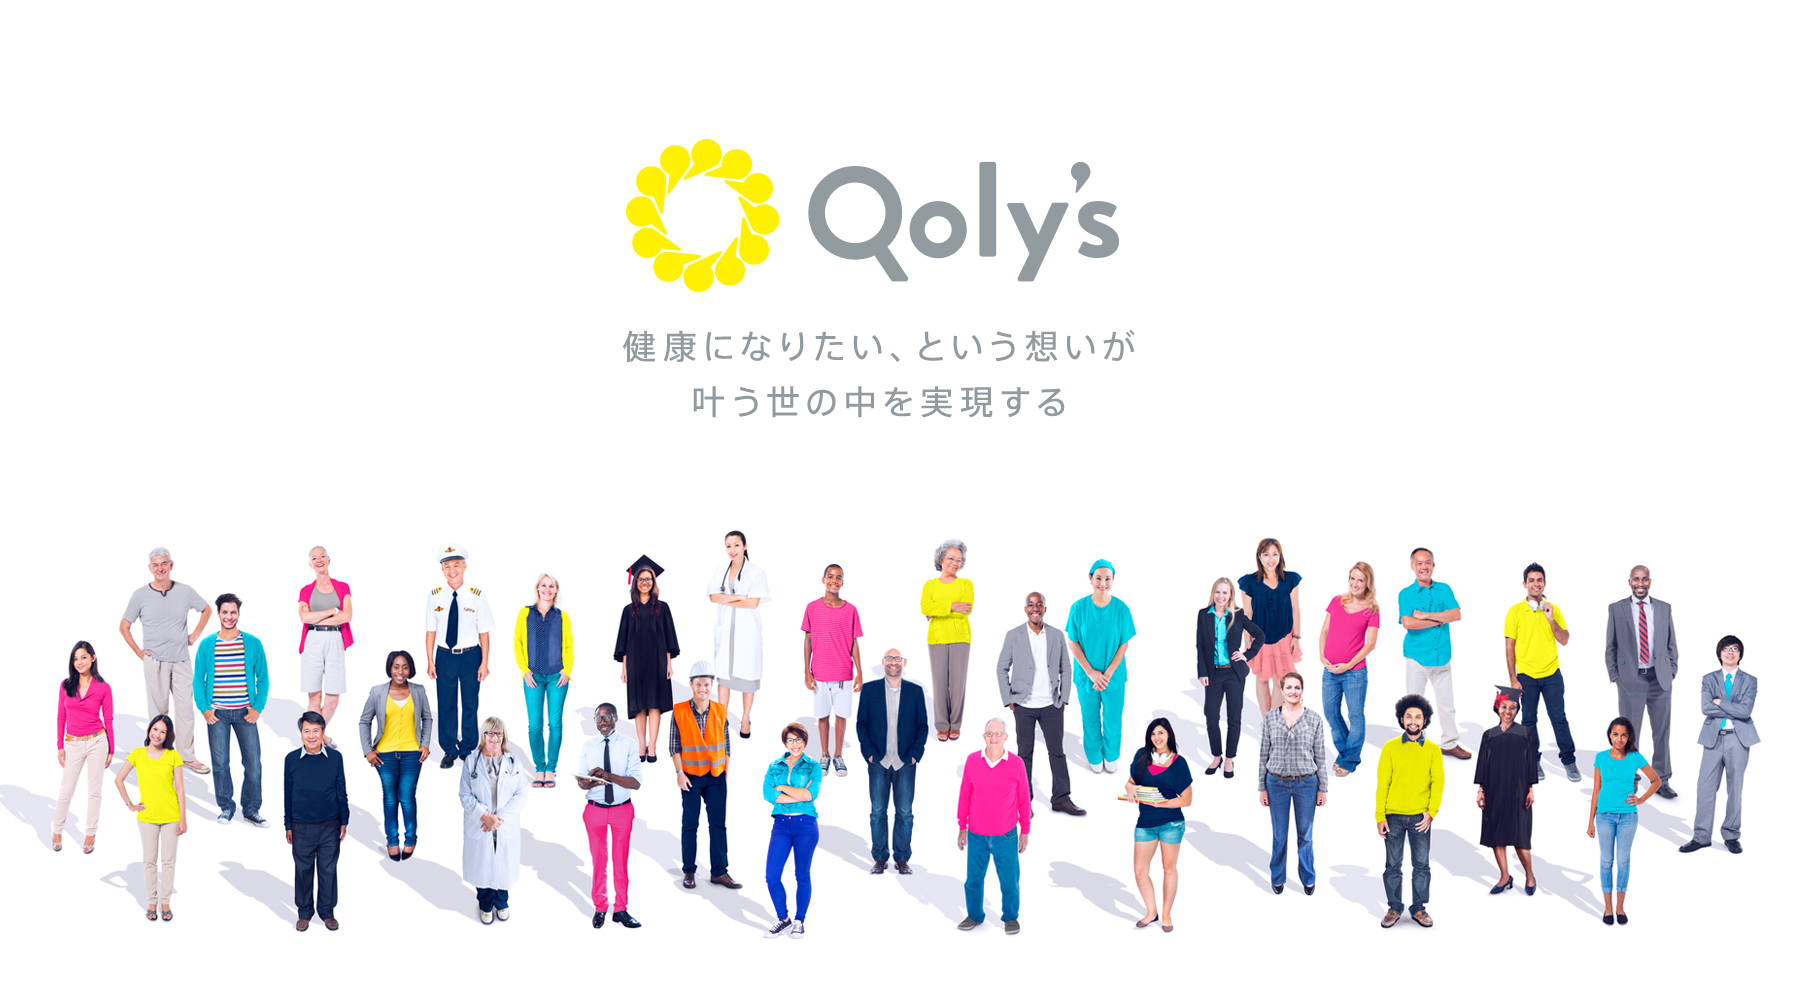 Qolys 健康になりたいという想いが叶う世の中を実現する